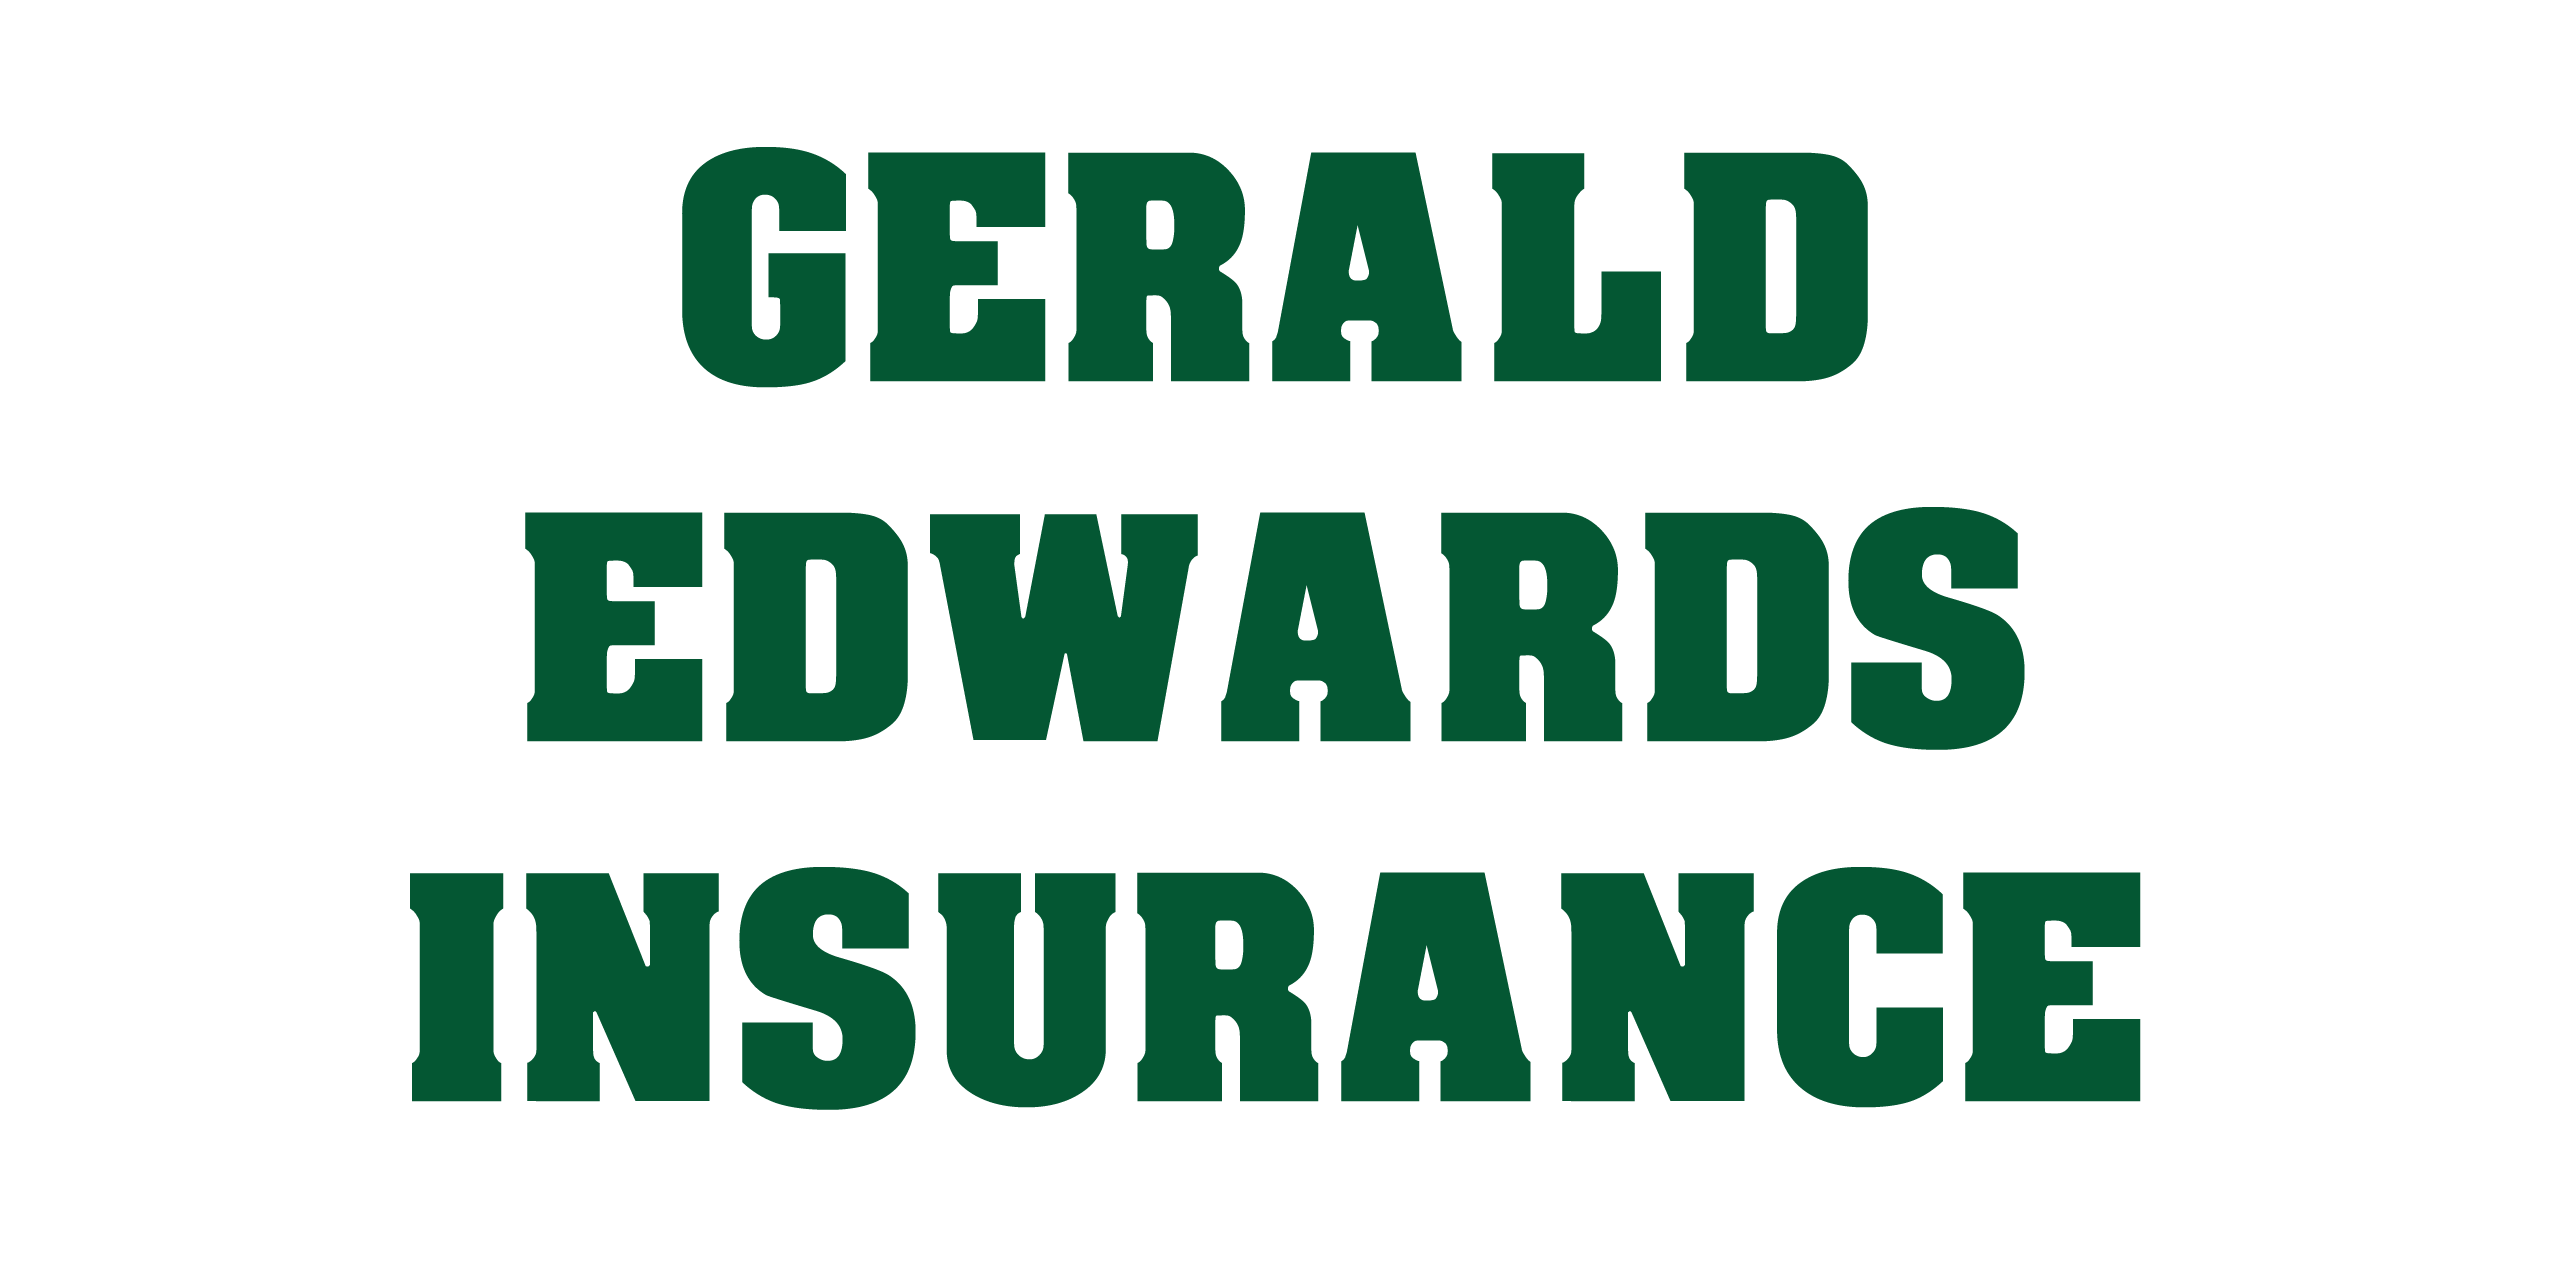 Gerald Edwards Insurance